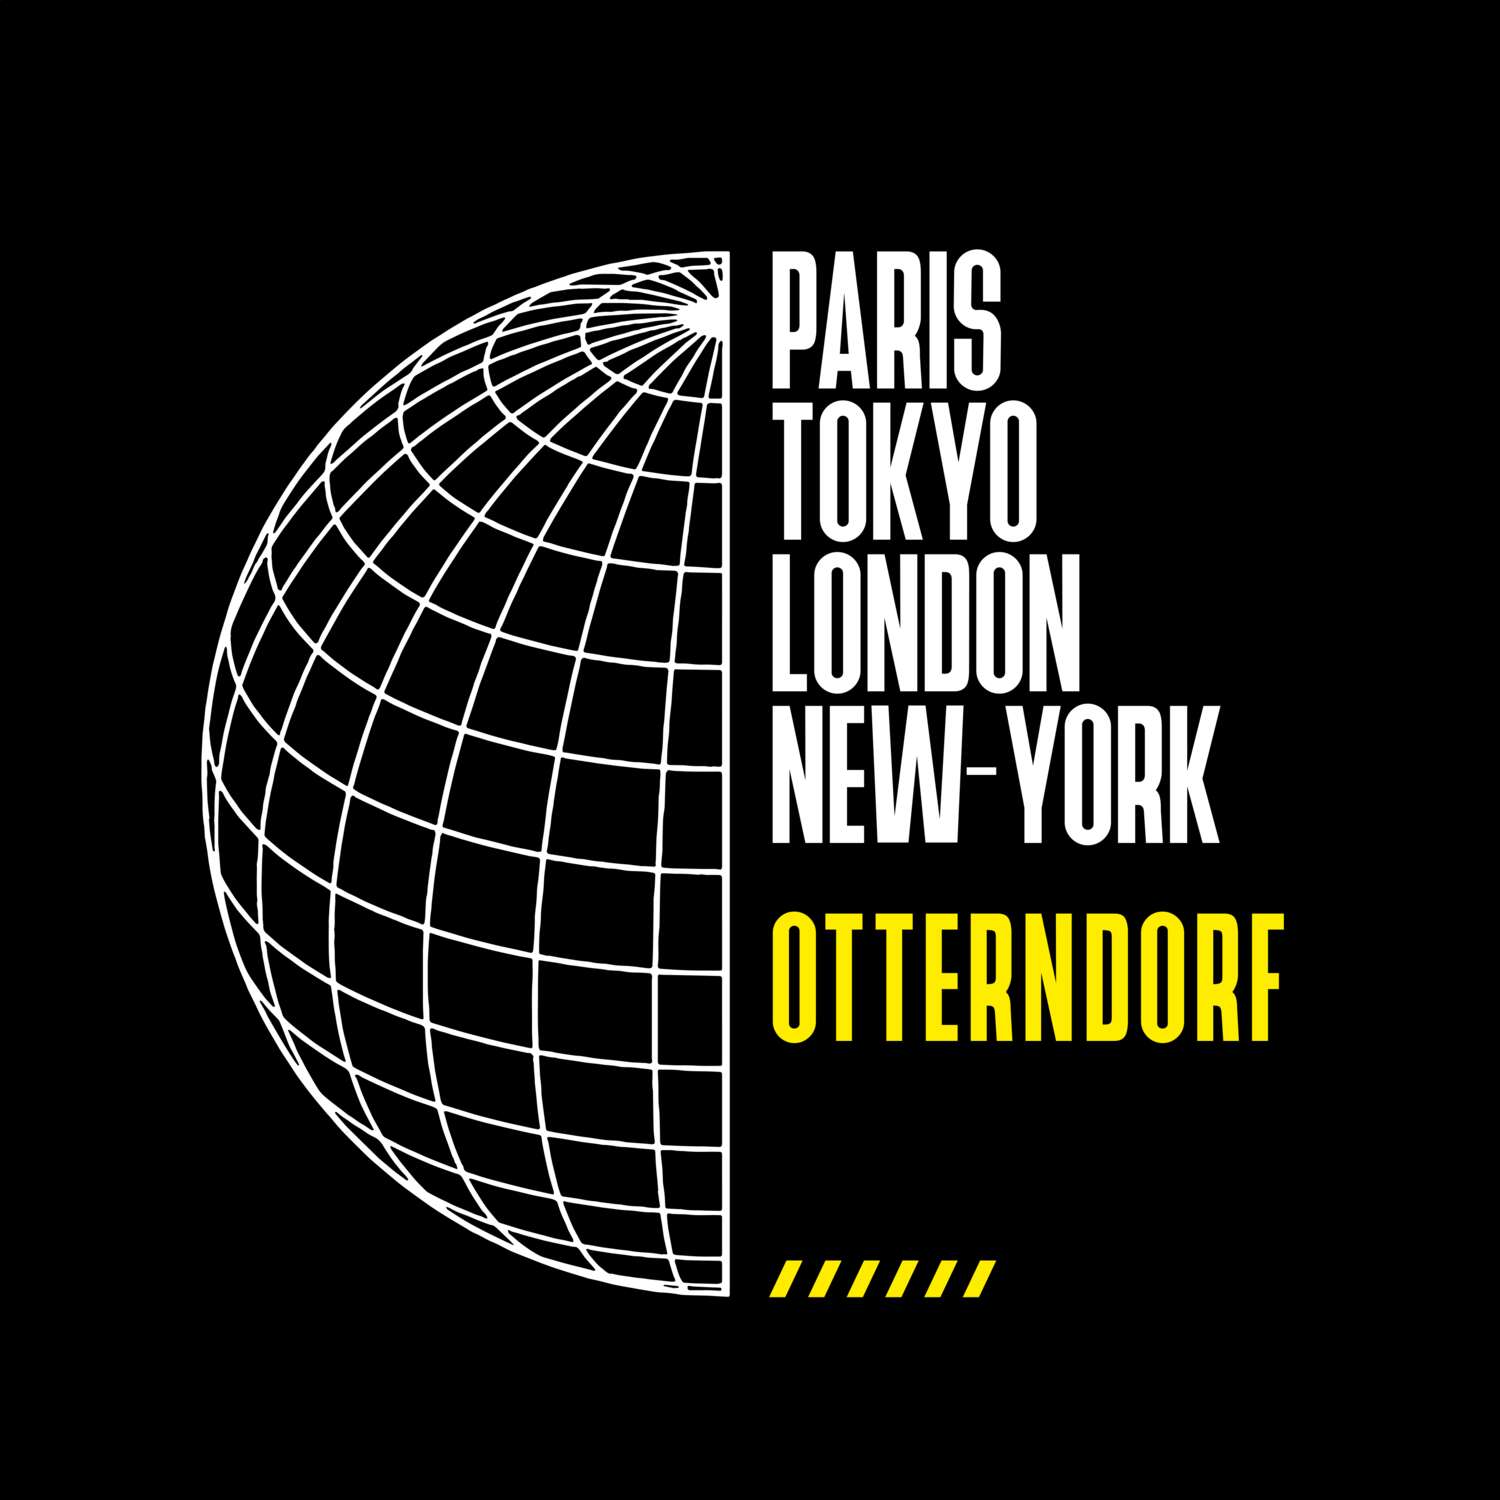 Otterndorf T-Shirt »Paris Tokyo London«